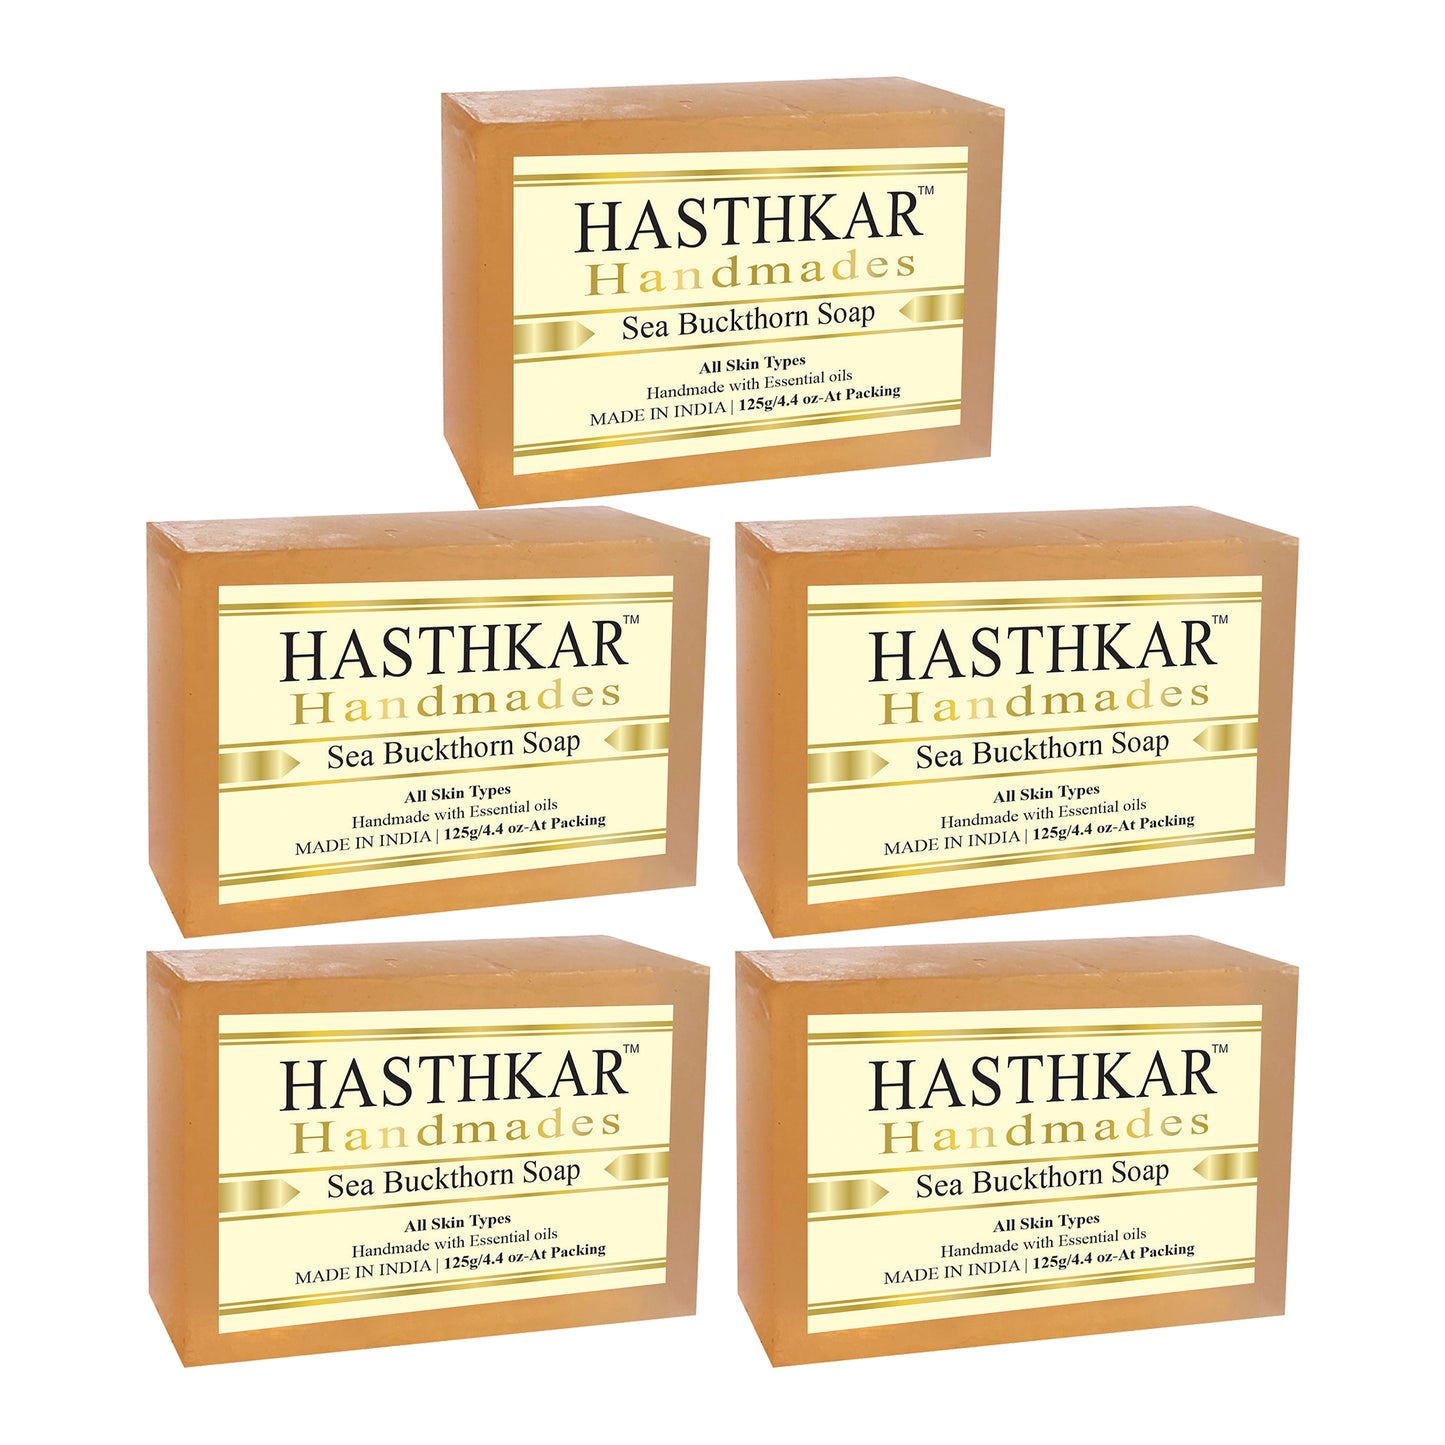 Hasthkar Handmades Glycerine Sea buckthorn Soap 125gm Pack of 5